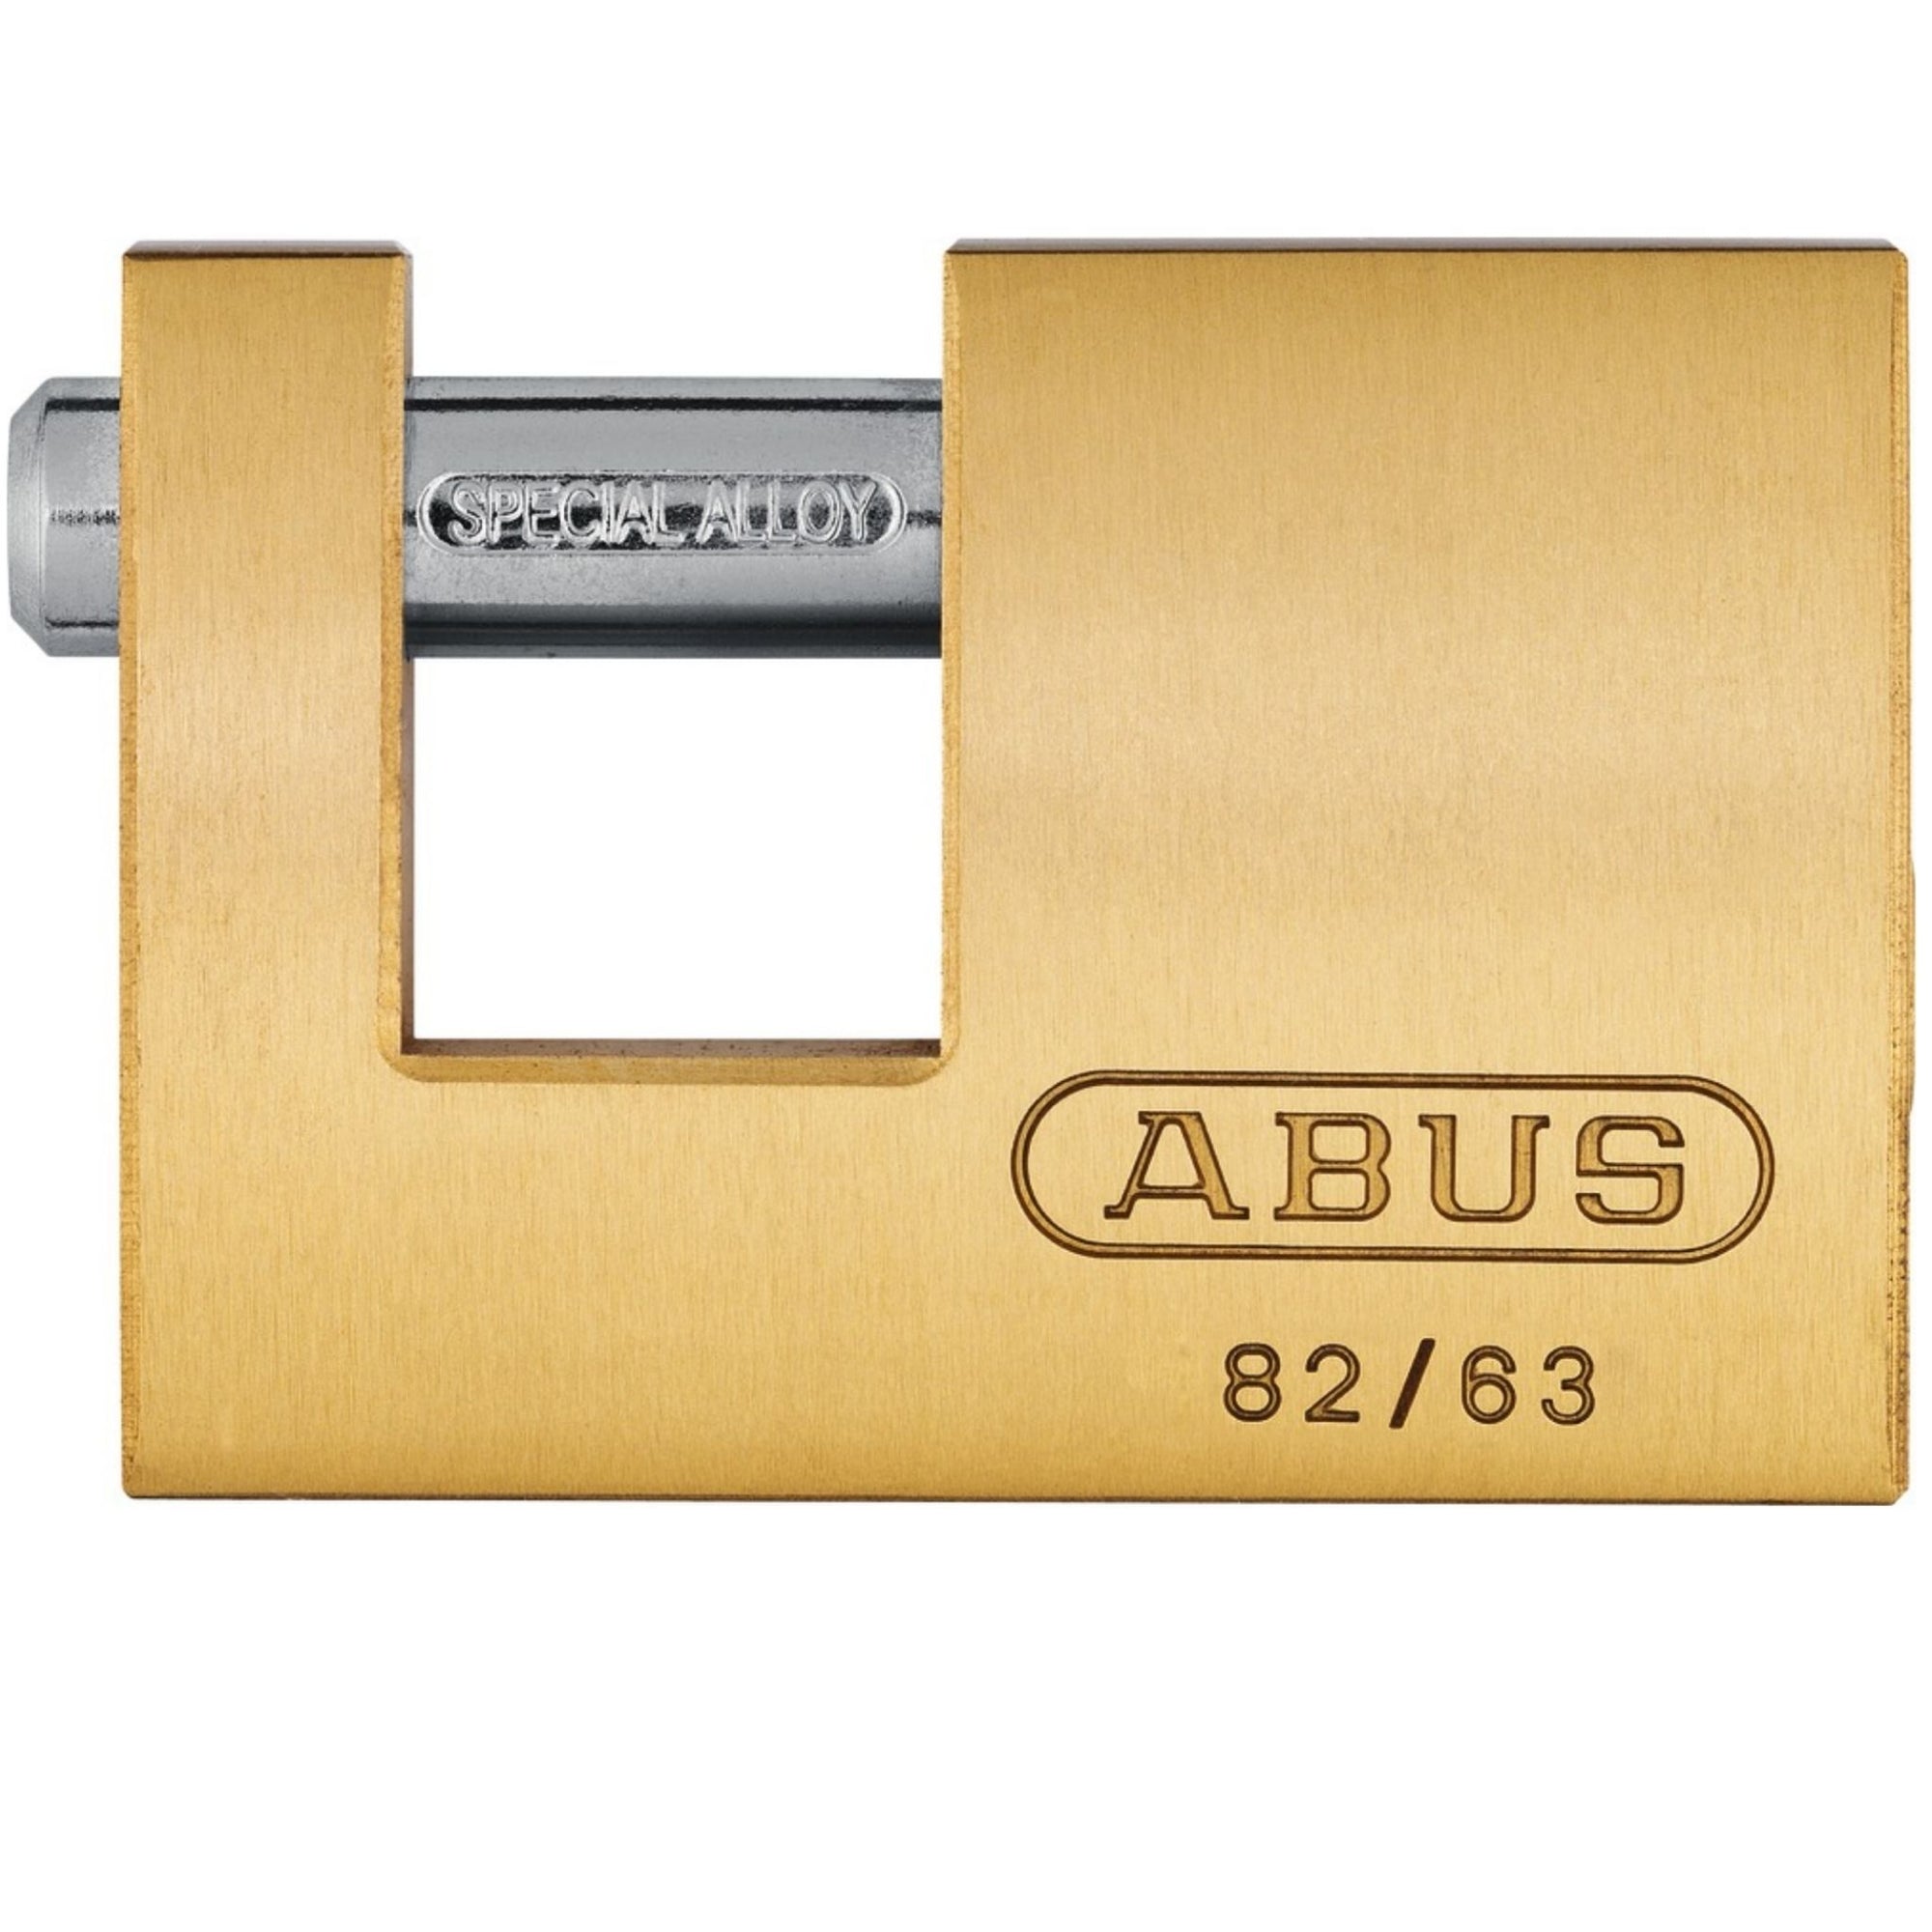 Abus 82/63 KA 8501 Monoblock Lock Brass Mono Block Padlock Keyed Alike to Match Existing Key# KA8501 - The Lock Source